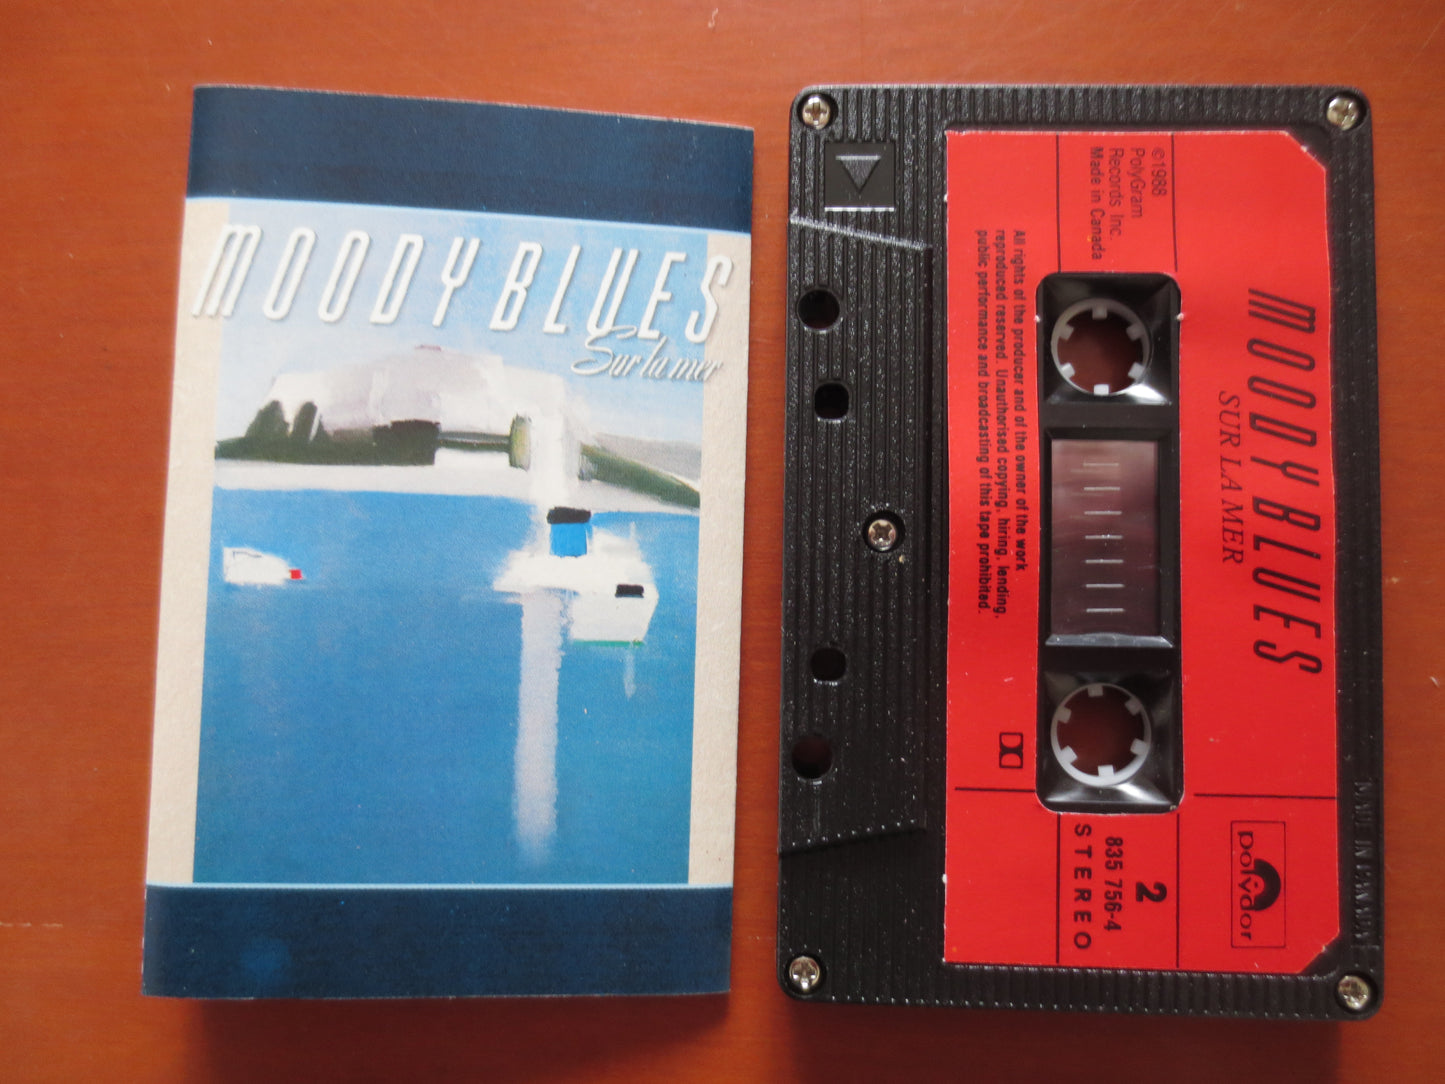 The MOODY BLUES, SURLAMER Album, Rock Tape, The Moody Blues Lp, Tape Cassette, Music Cassette, Pop Cassette, 1988 Cassette